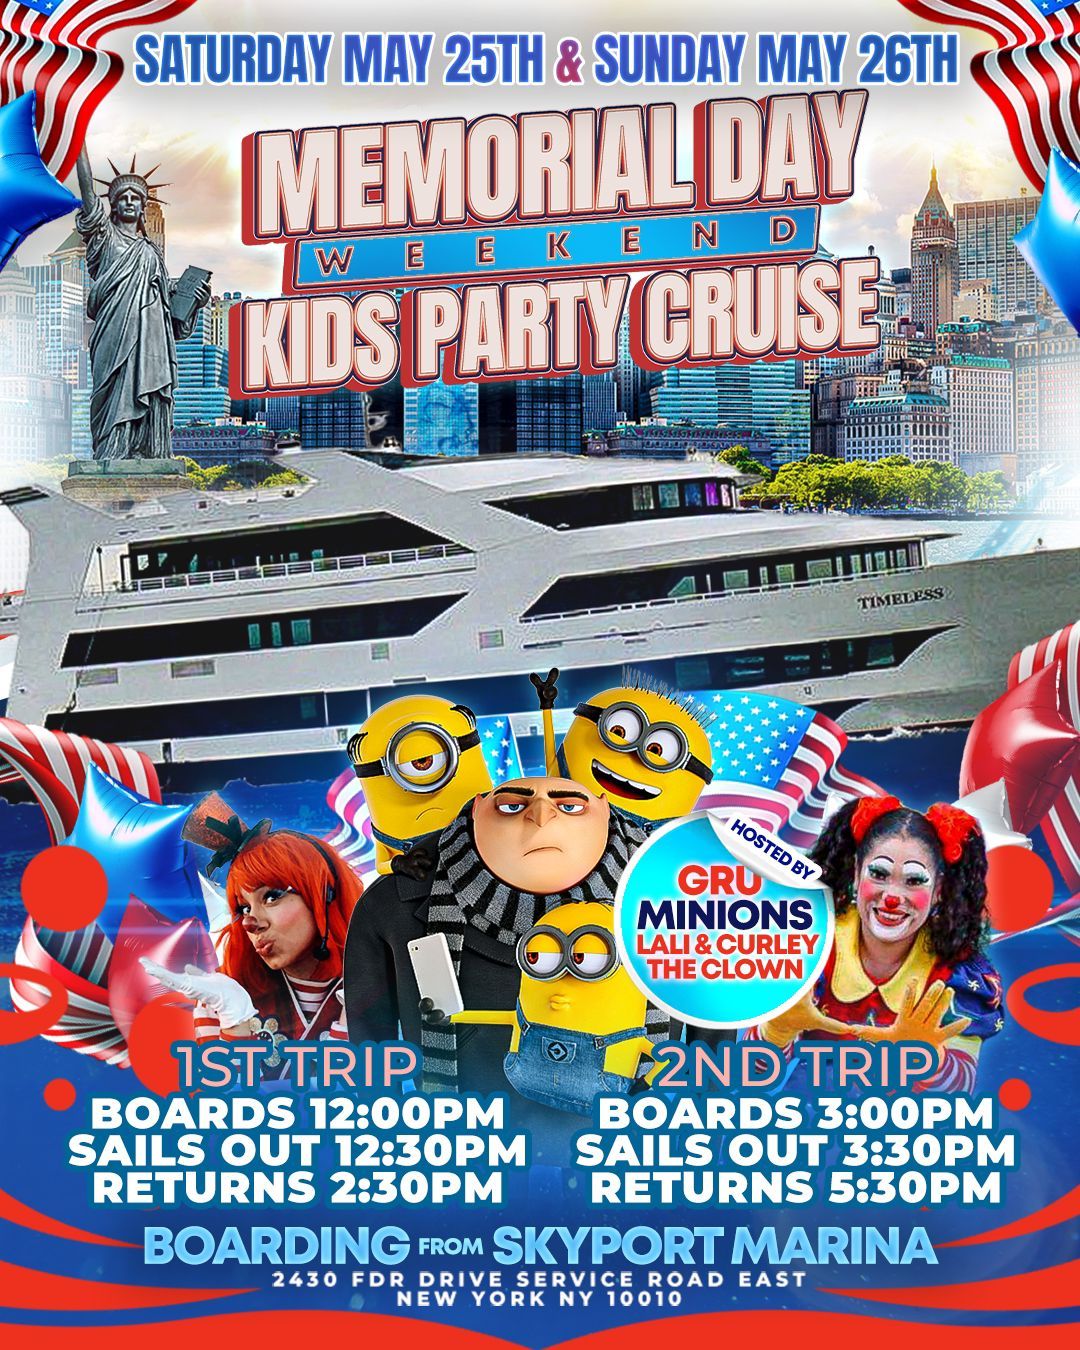 \ud83d\udef3 Memorial Day Weekend Kids Party Cruise! \ud83c\uddfa\ud83c\uddf8